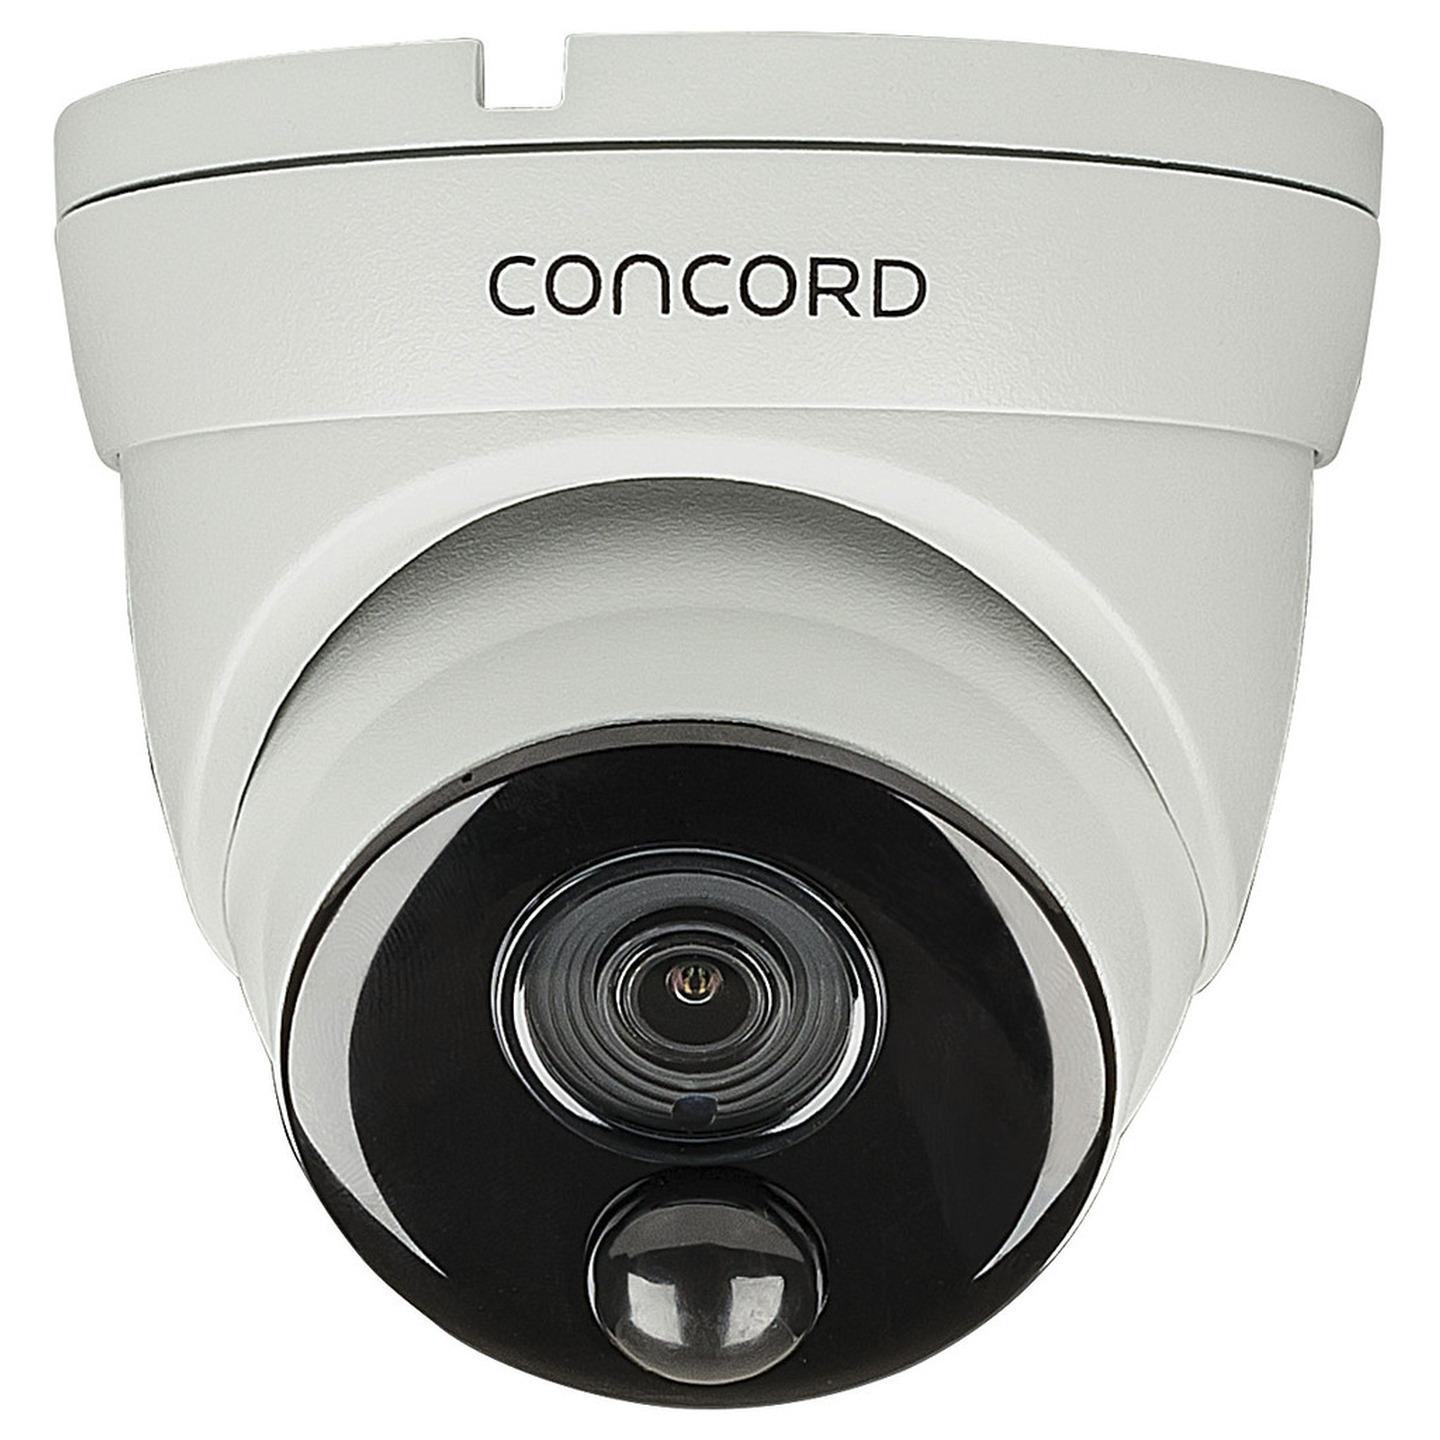 Concord AHD 1080p PIR Dome Camera